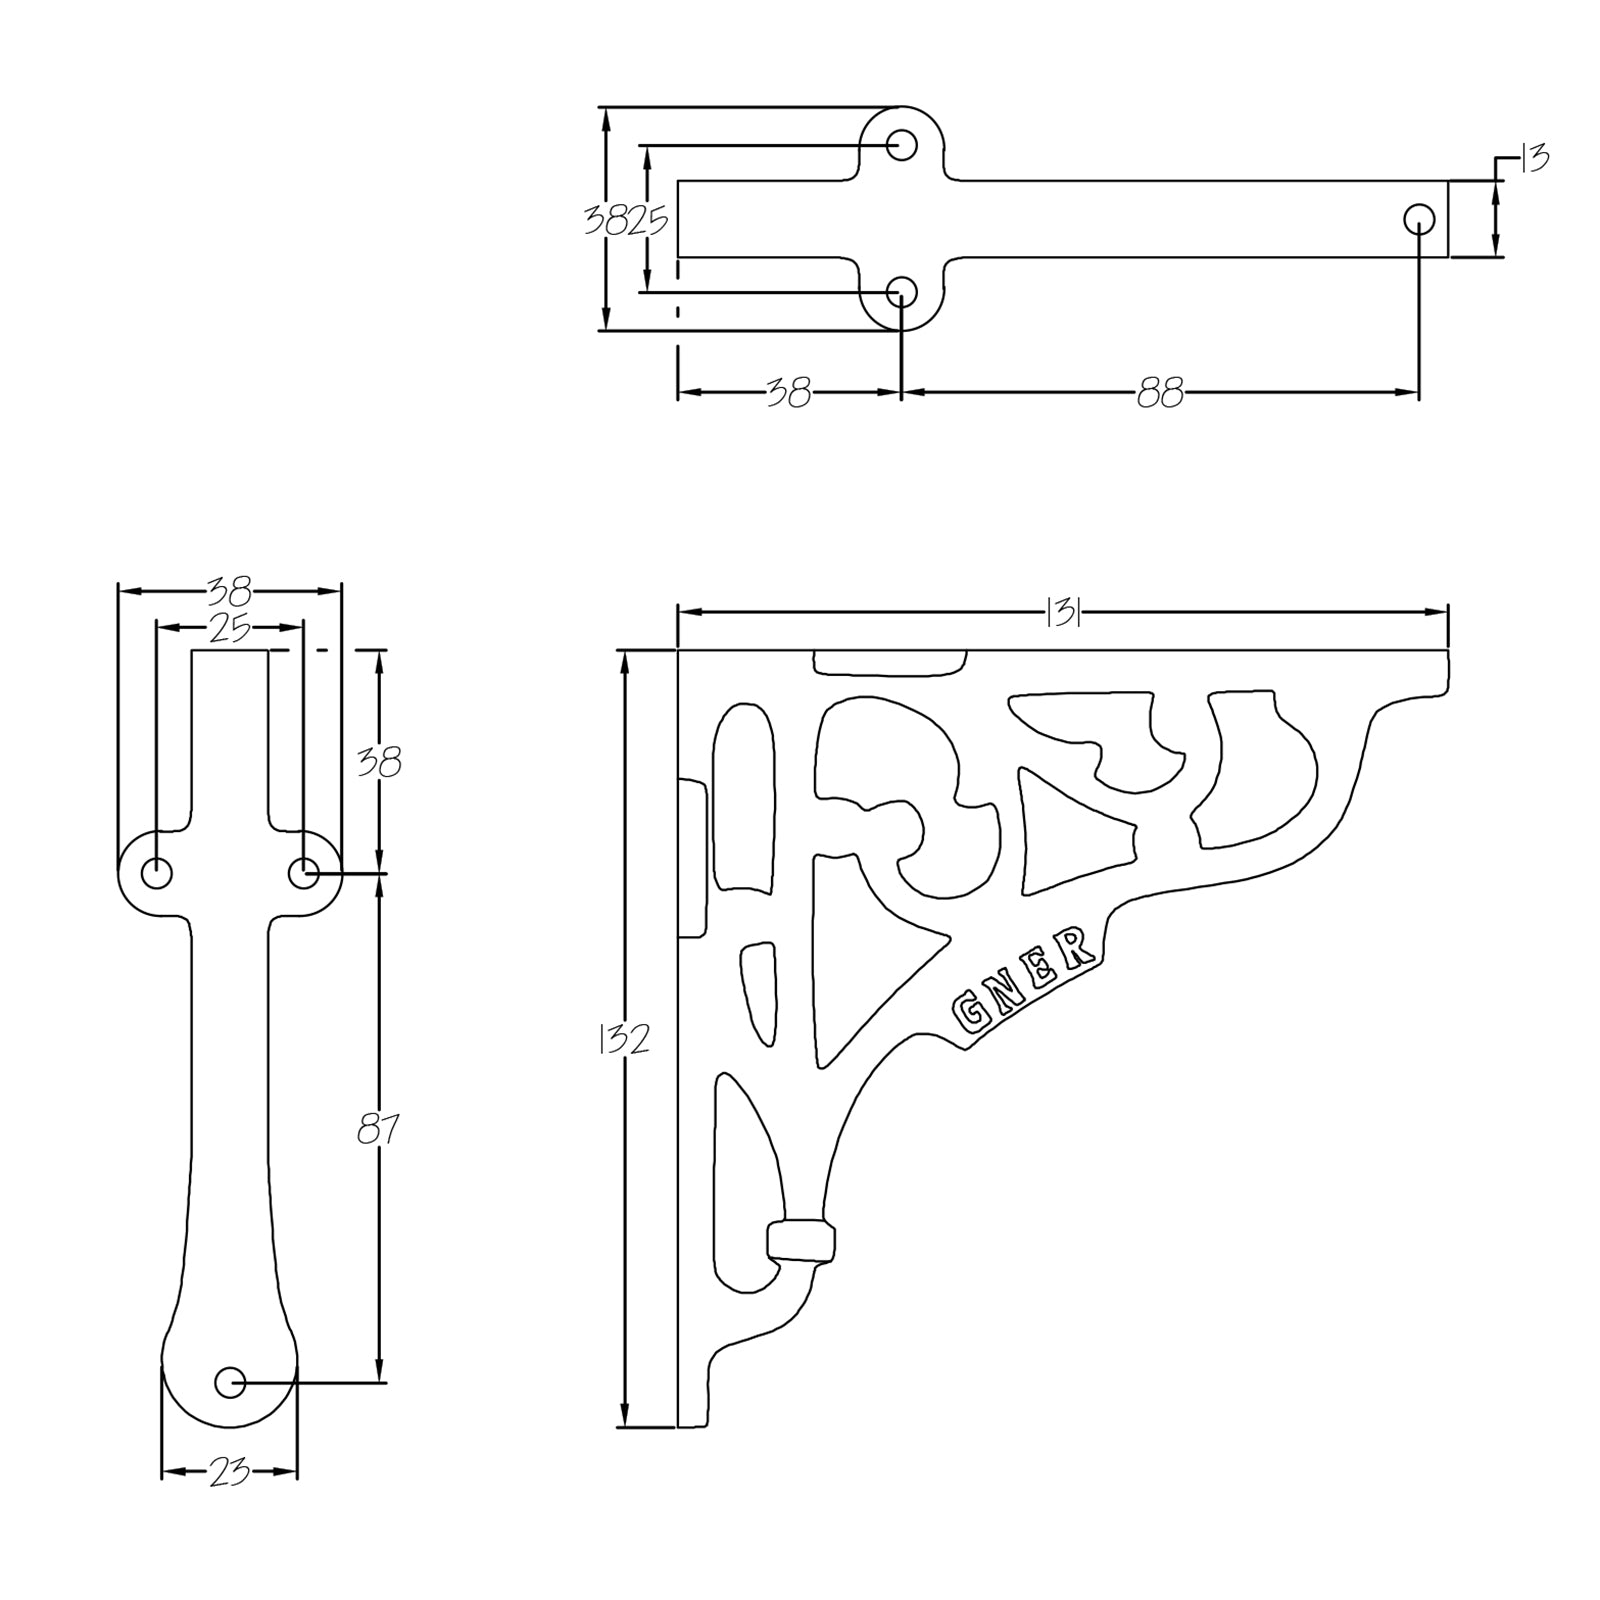 Dimension drawing for 5 inch GNER shelf bracket SHOW